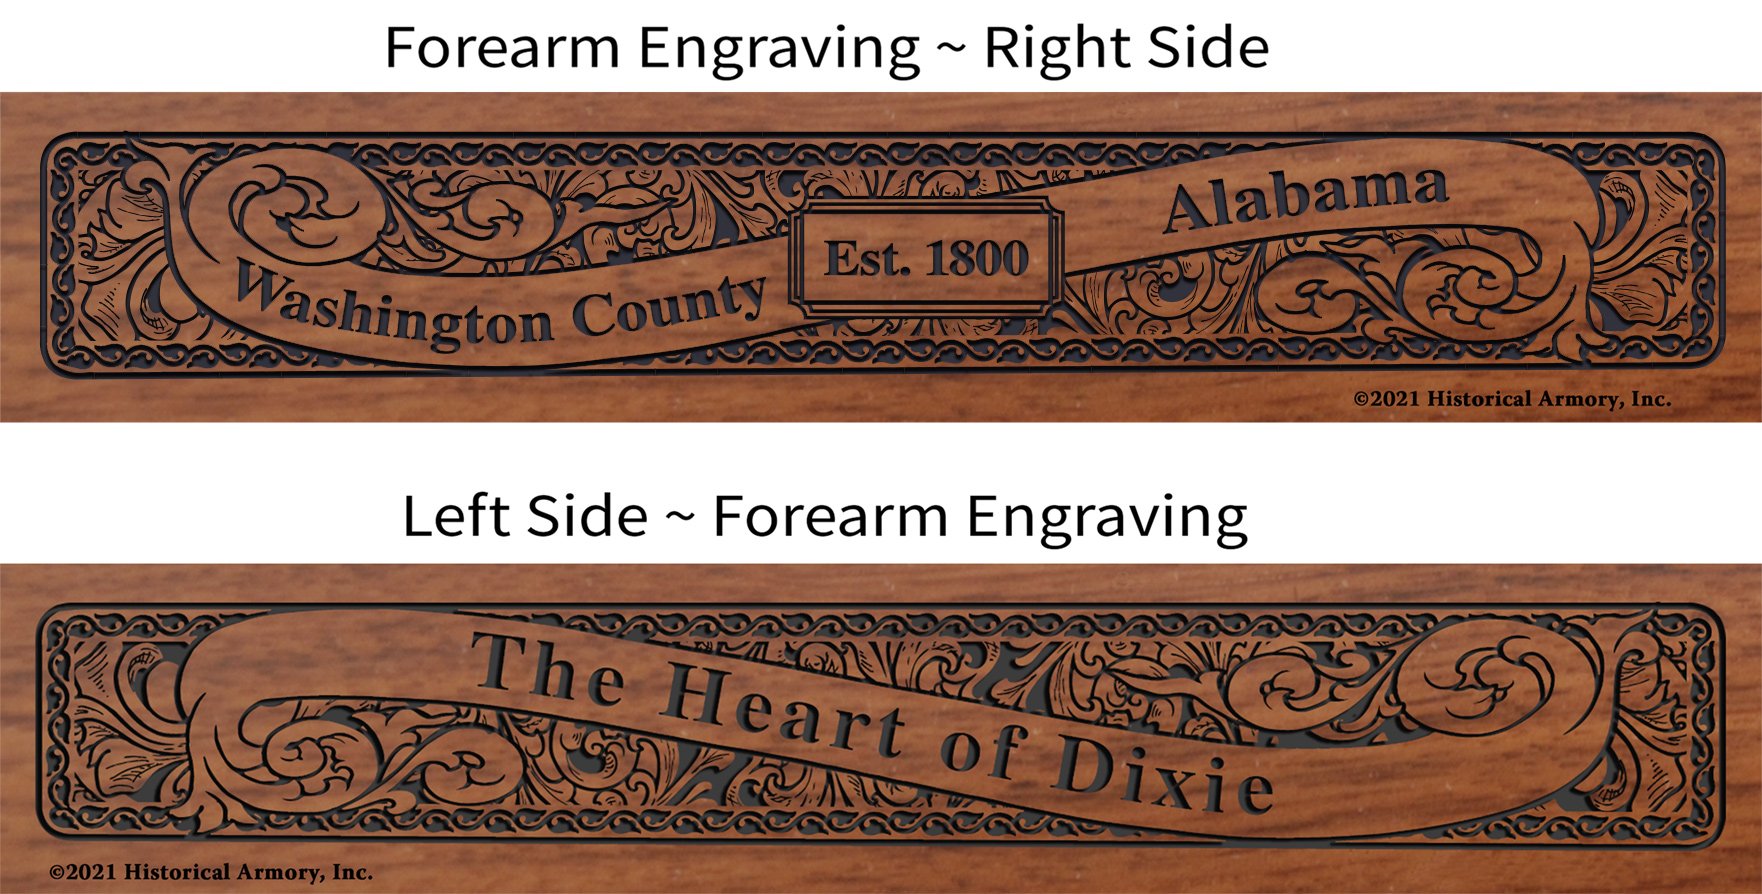 Washington County Alabama Establishment and Motto History Engraved Rifle Forearm